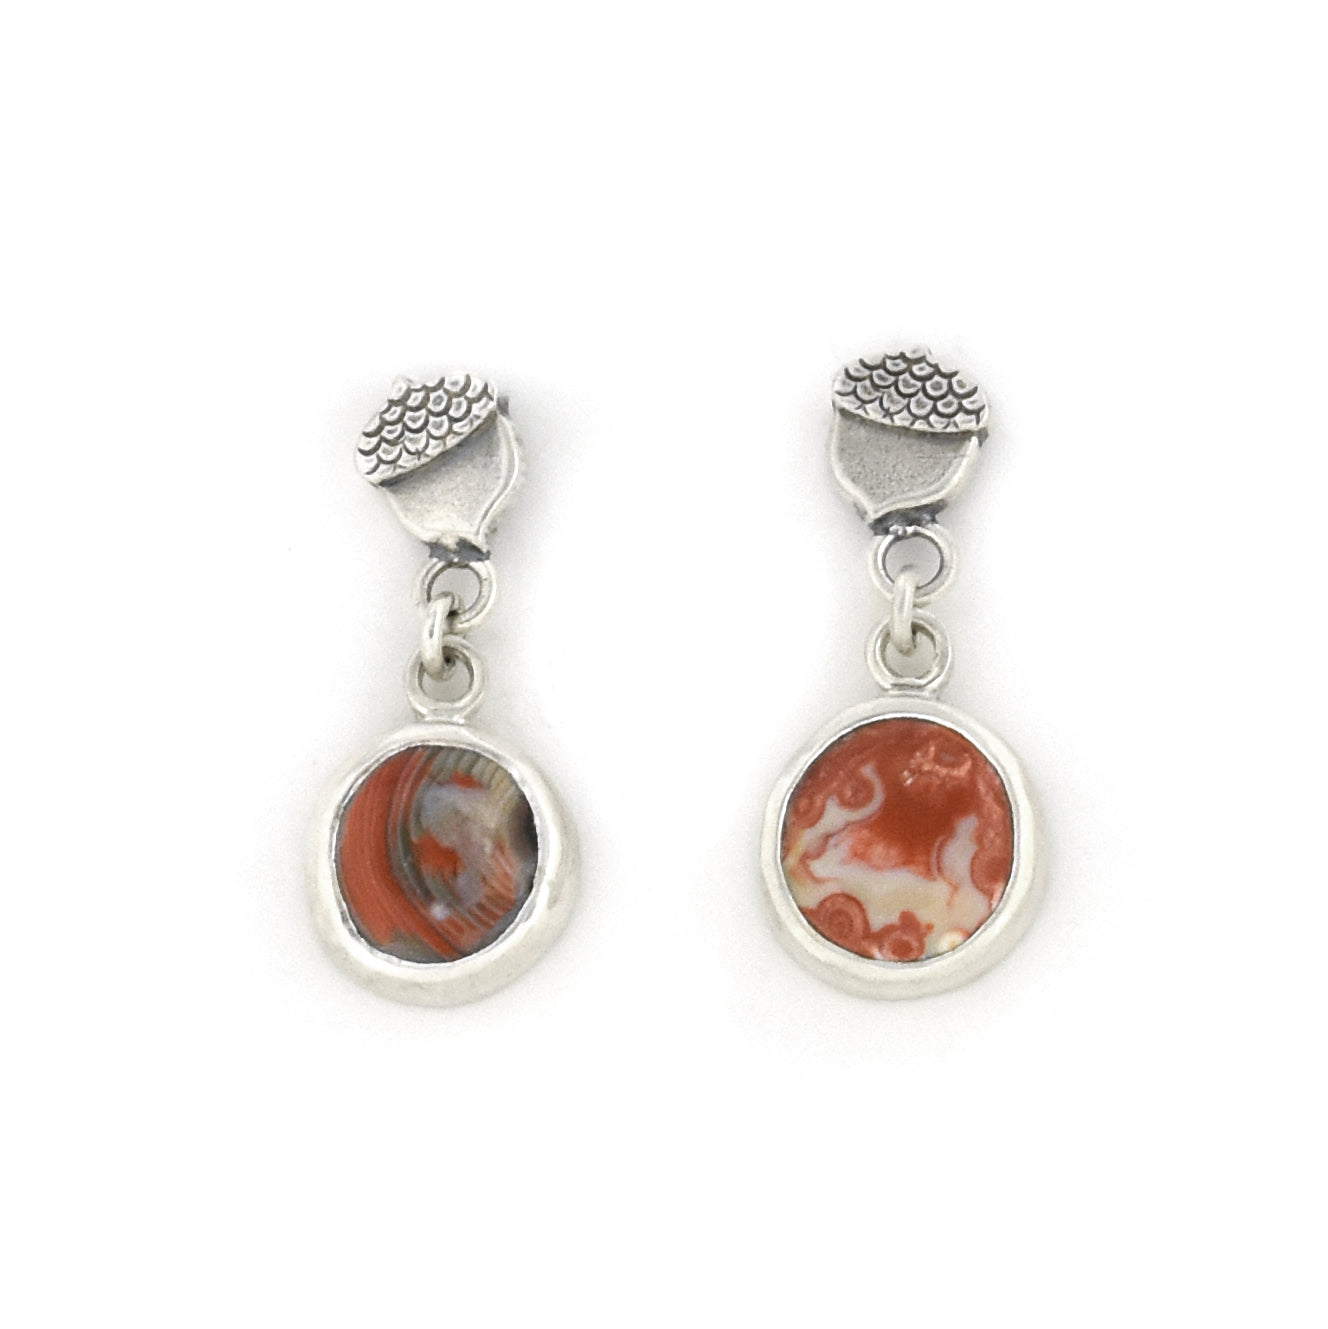 Acorn Agate Earrings - Silver Earrings   6586 - handmade by Beth Millner Jewelry